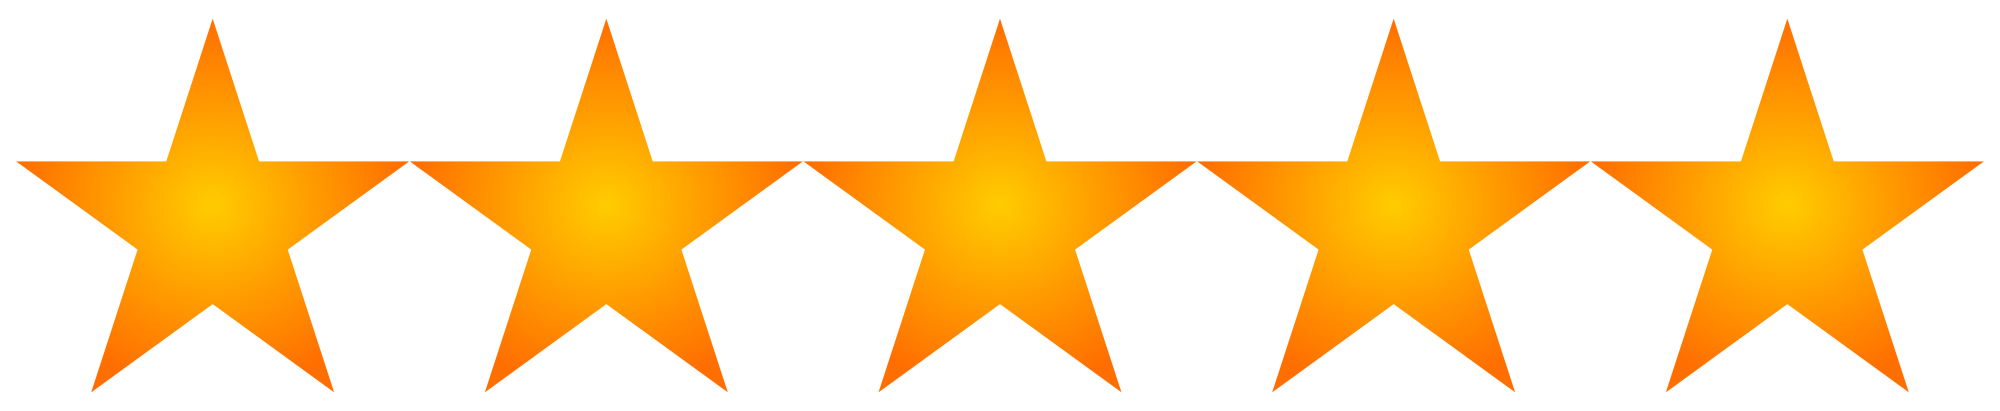 kamagra five star